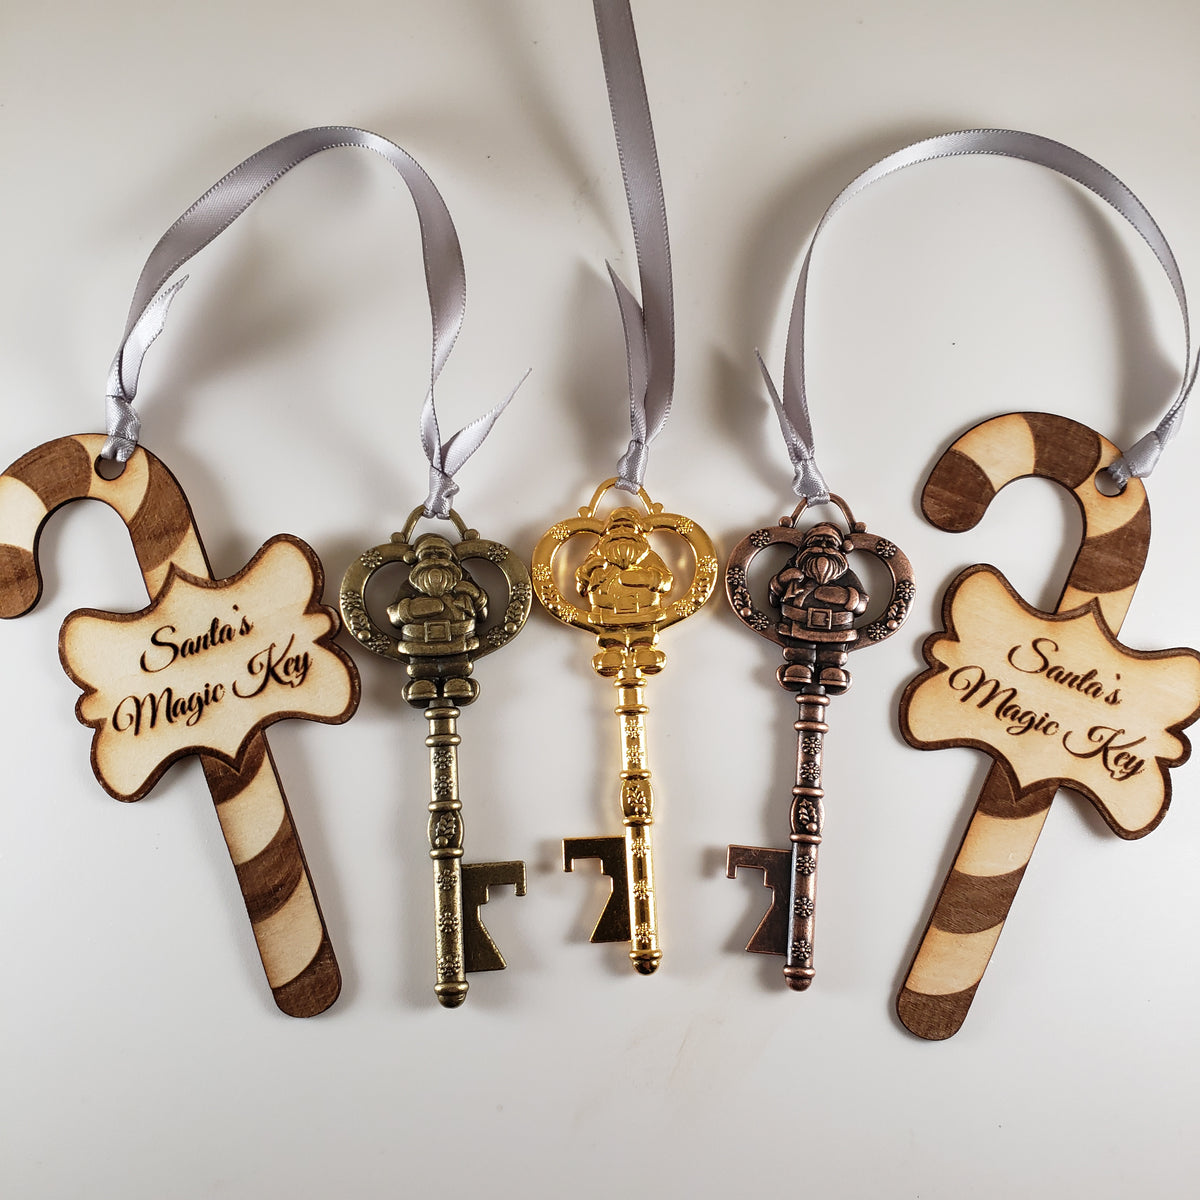 Santas Key- Santa magic key-Personalized Santa's Key- Christmas